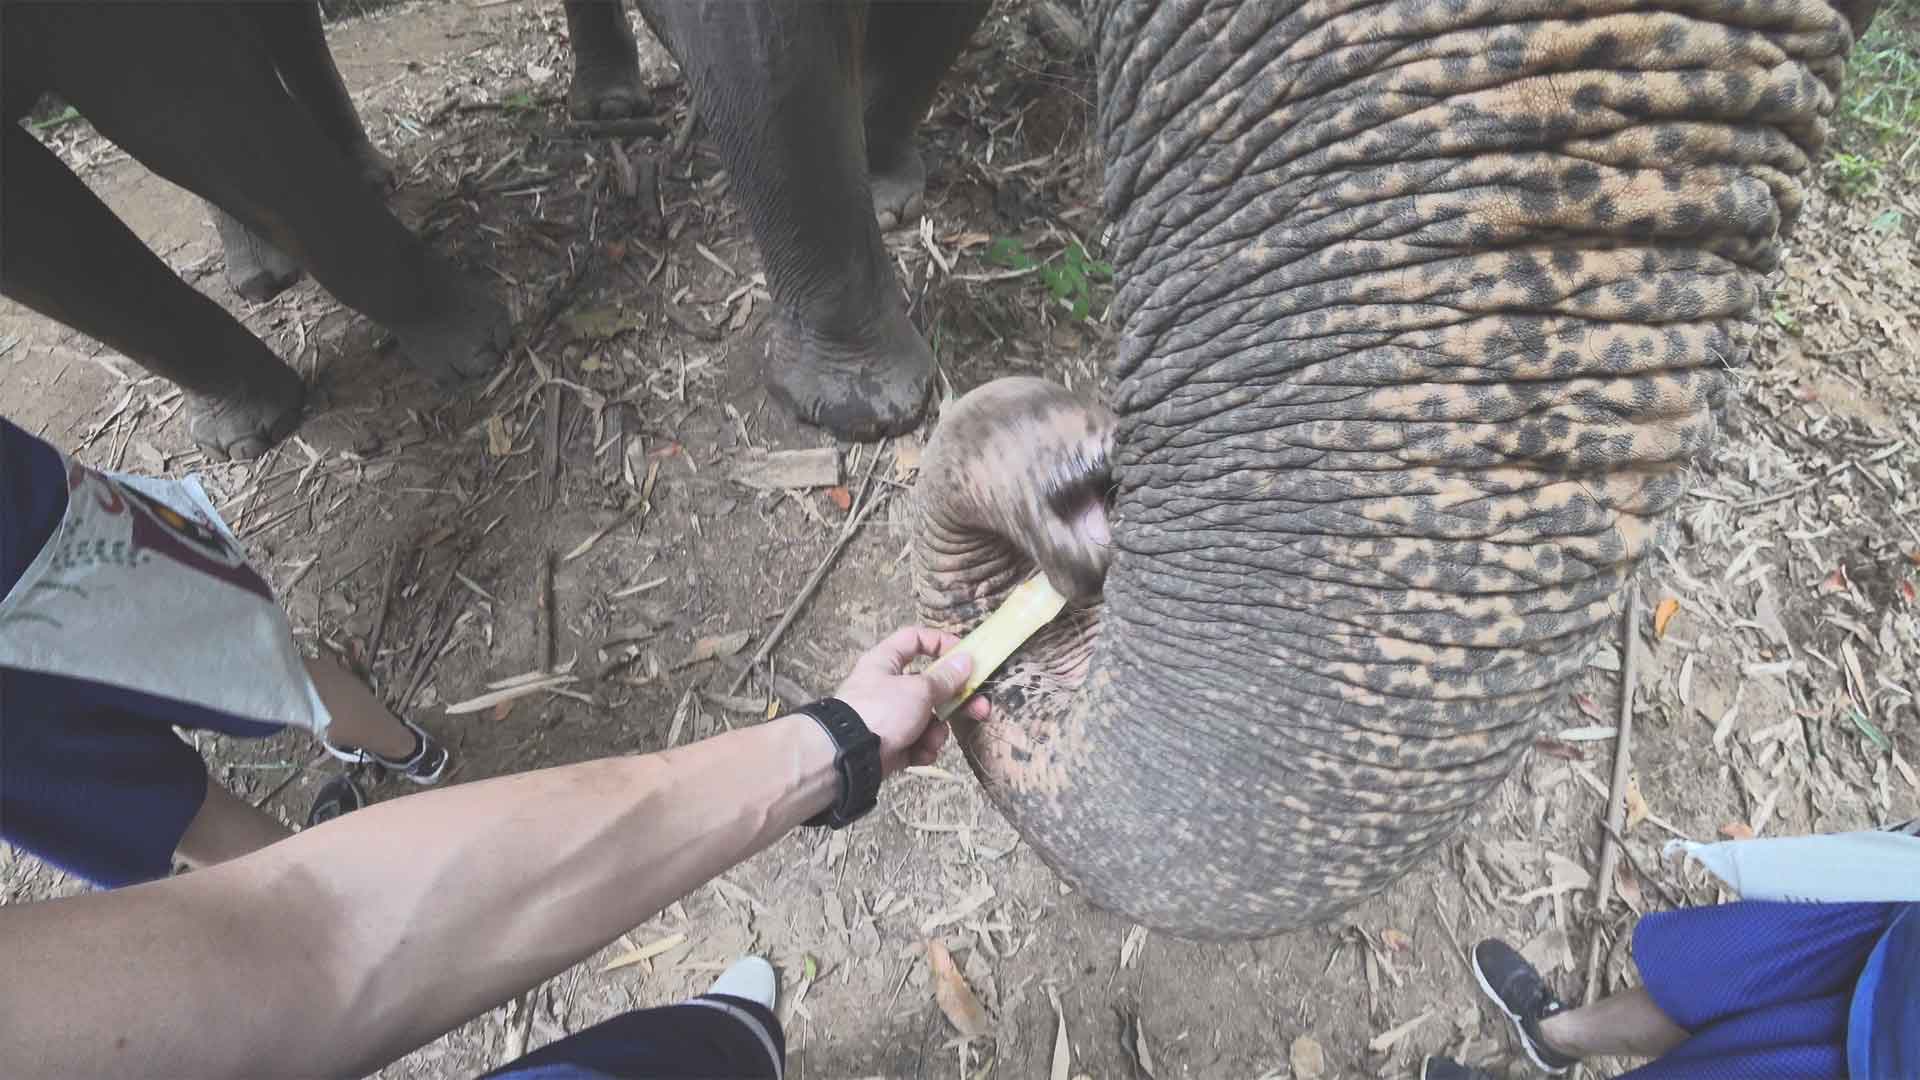 Elefantentour - Chiang Mai Mountain Sanctuary - Trekking-Tour durch den Dschungel - Elefanten mit Zuckerrohr füttern